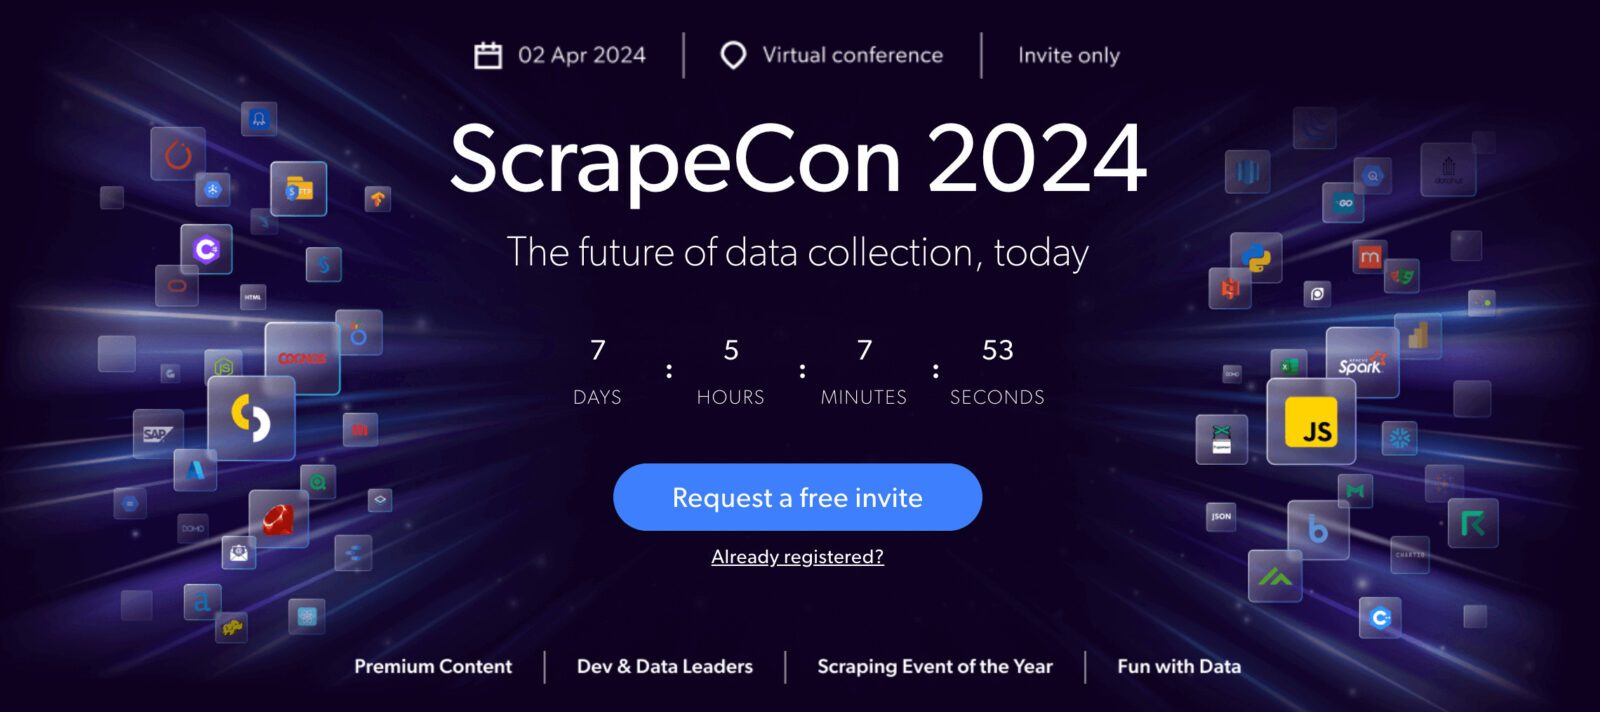 scrapecon promotional image